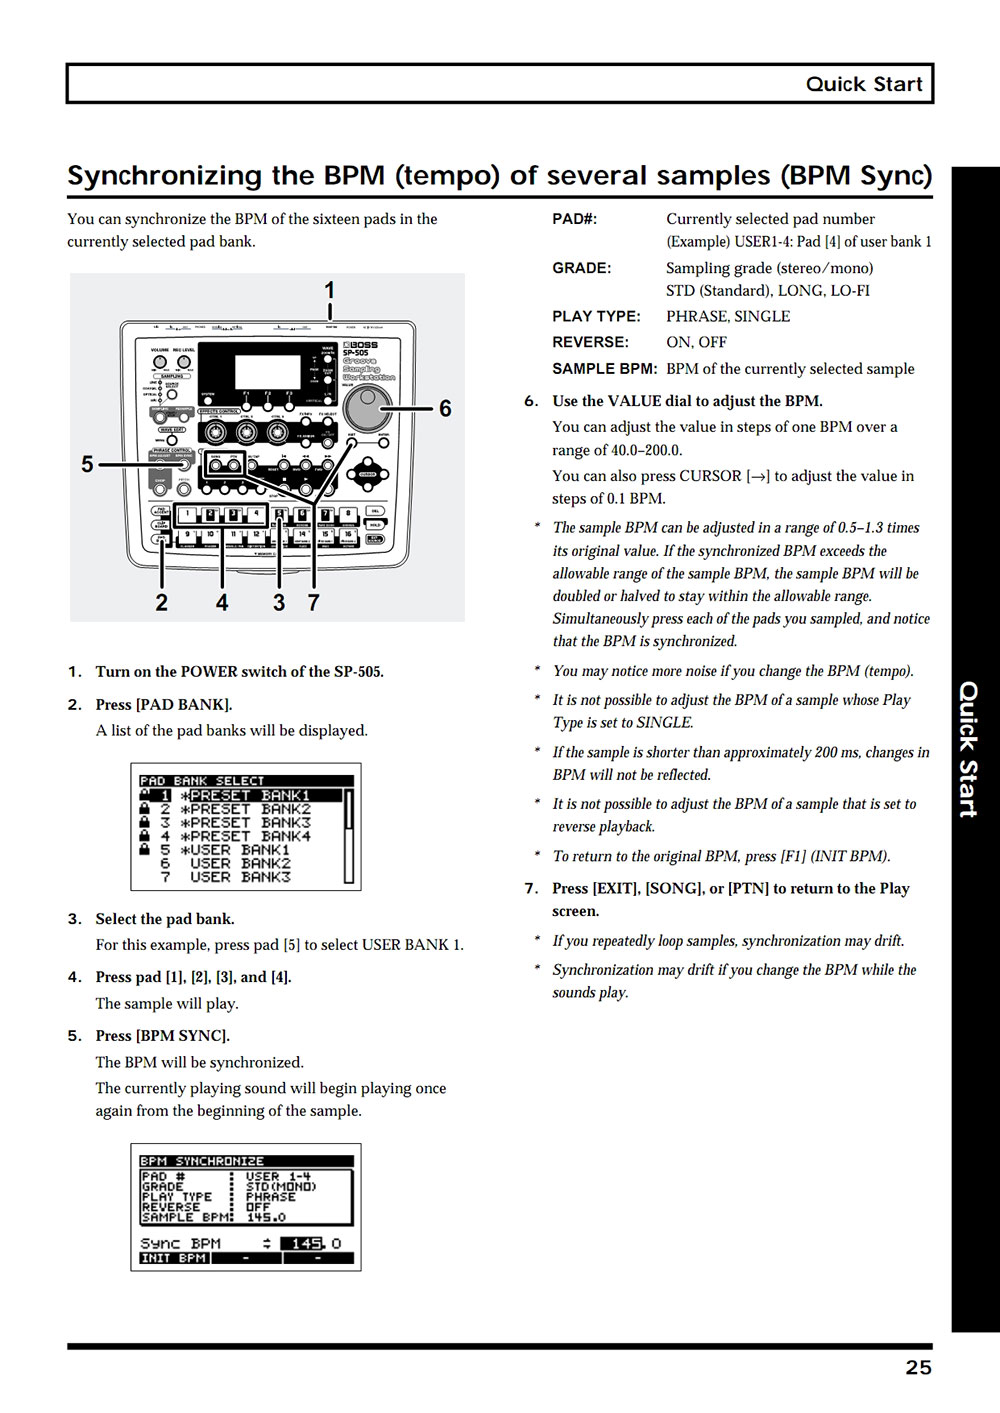 SP-505_e2-full-manual.unlocked25_025.jpg